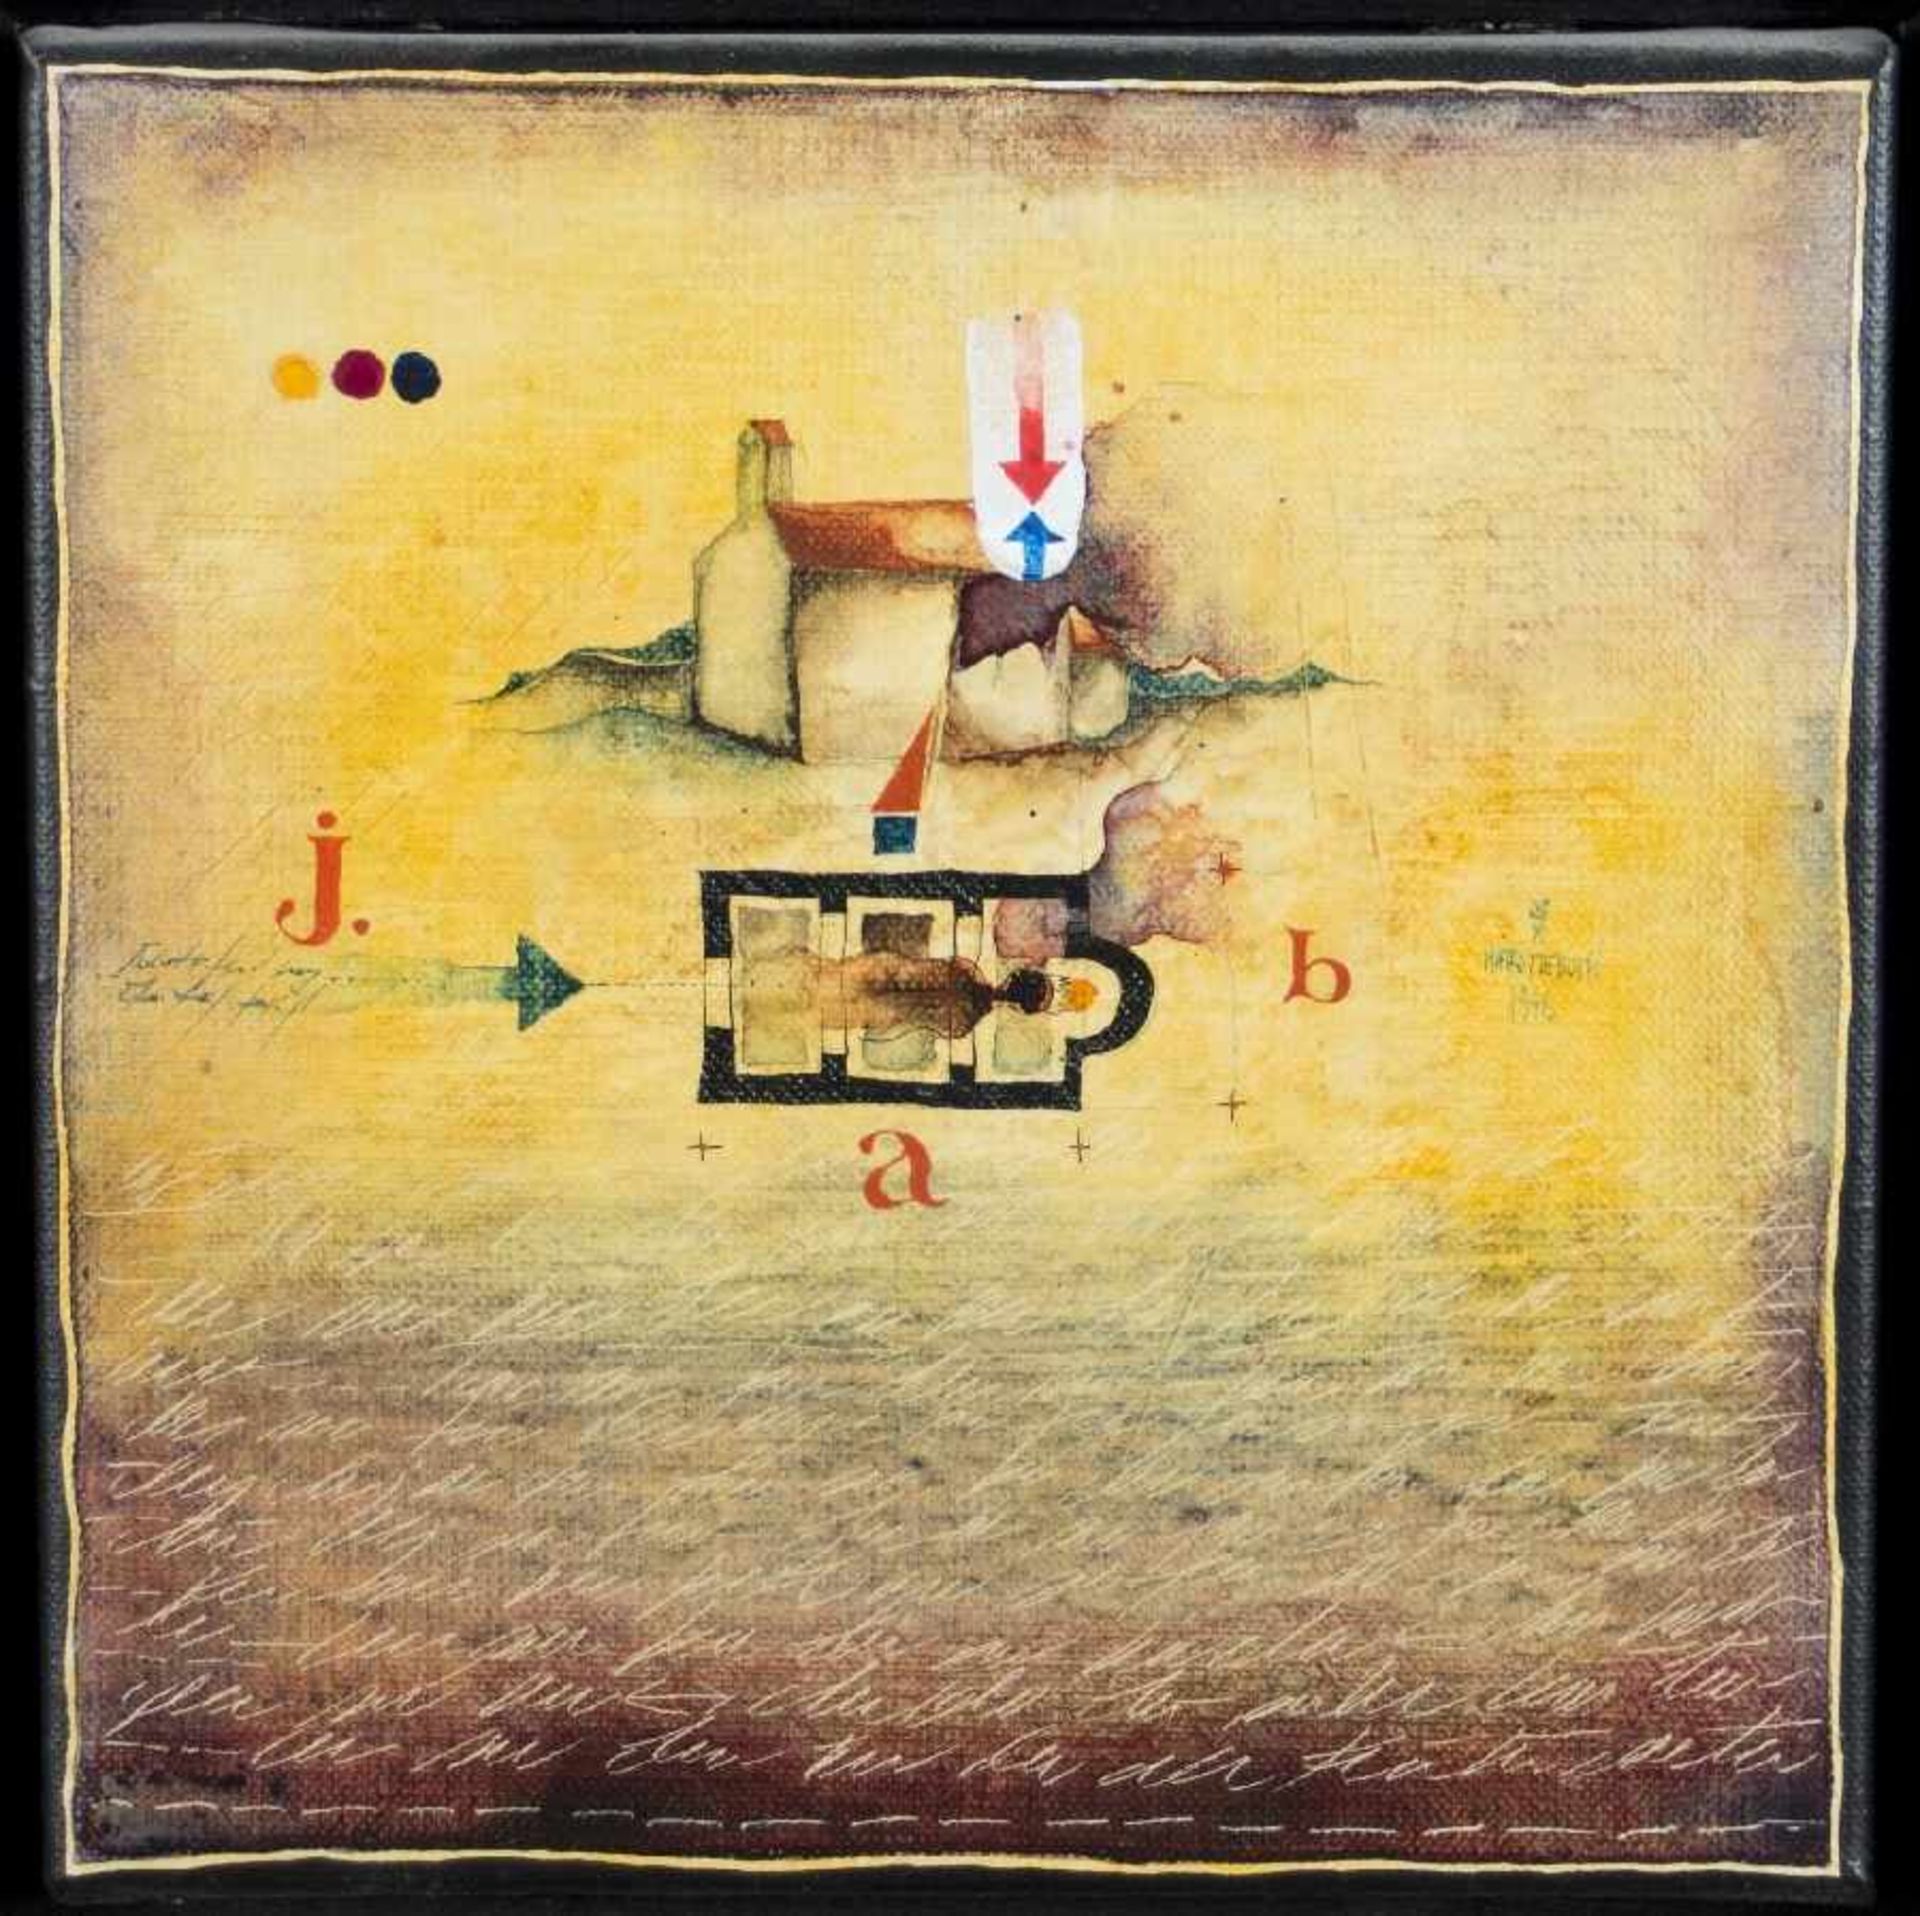 Matko Trebotic1935 Milna/Bracj.a b (Komposition mit Haus)Öl auf Lwd; H 20,5 cm, B 20,5 cm;